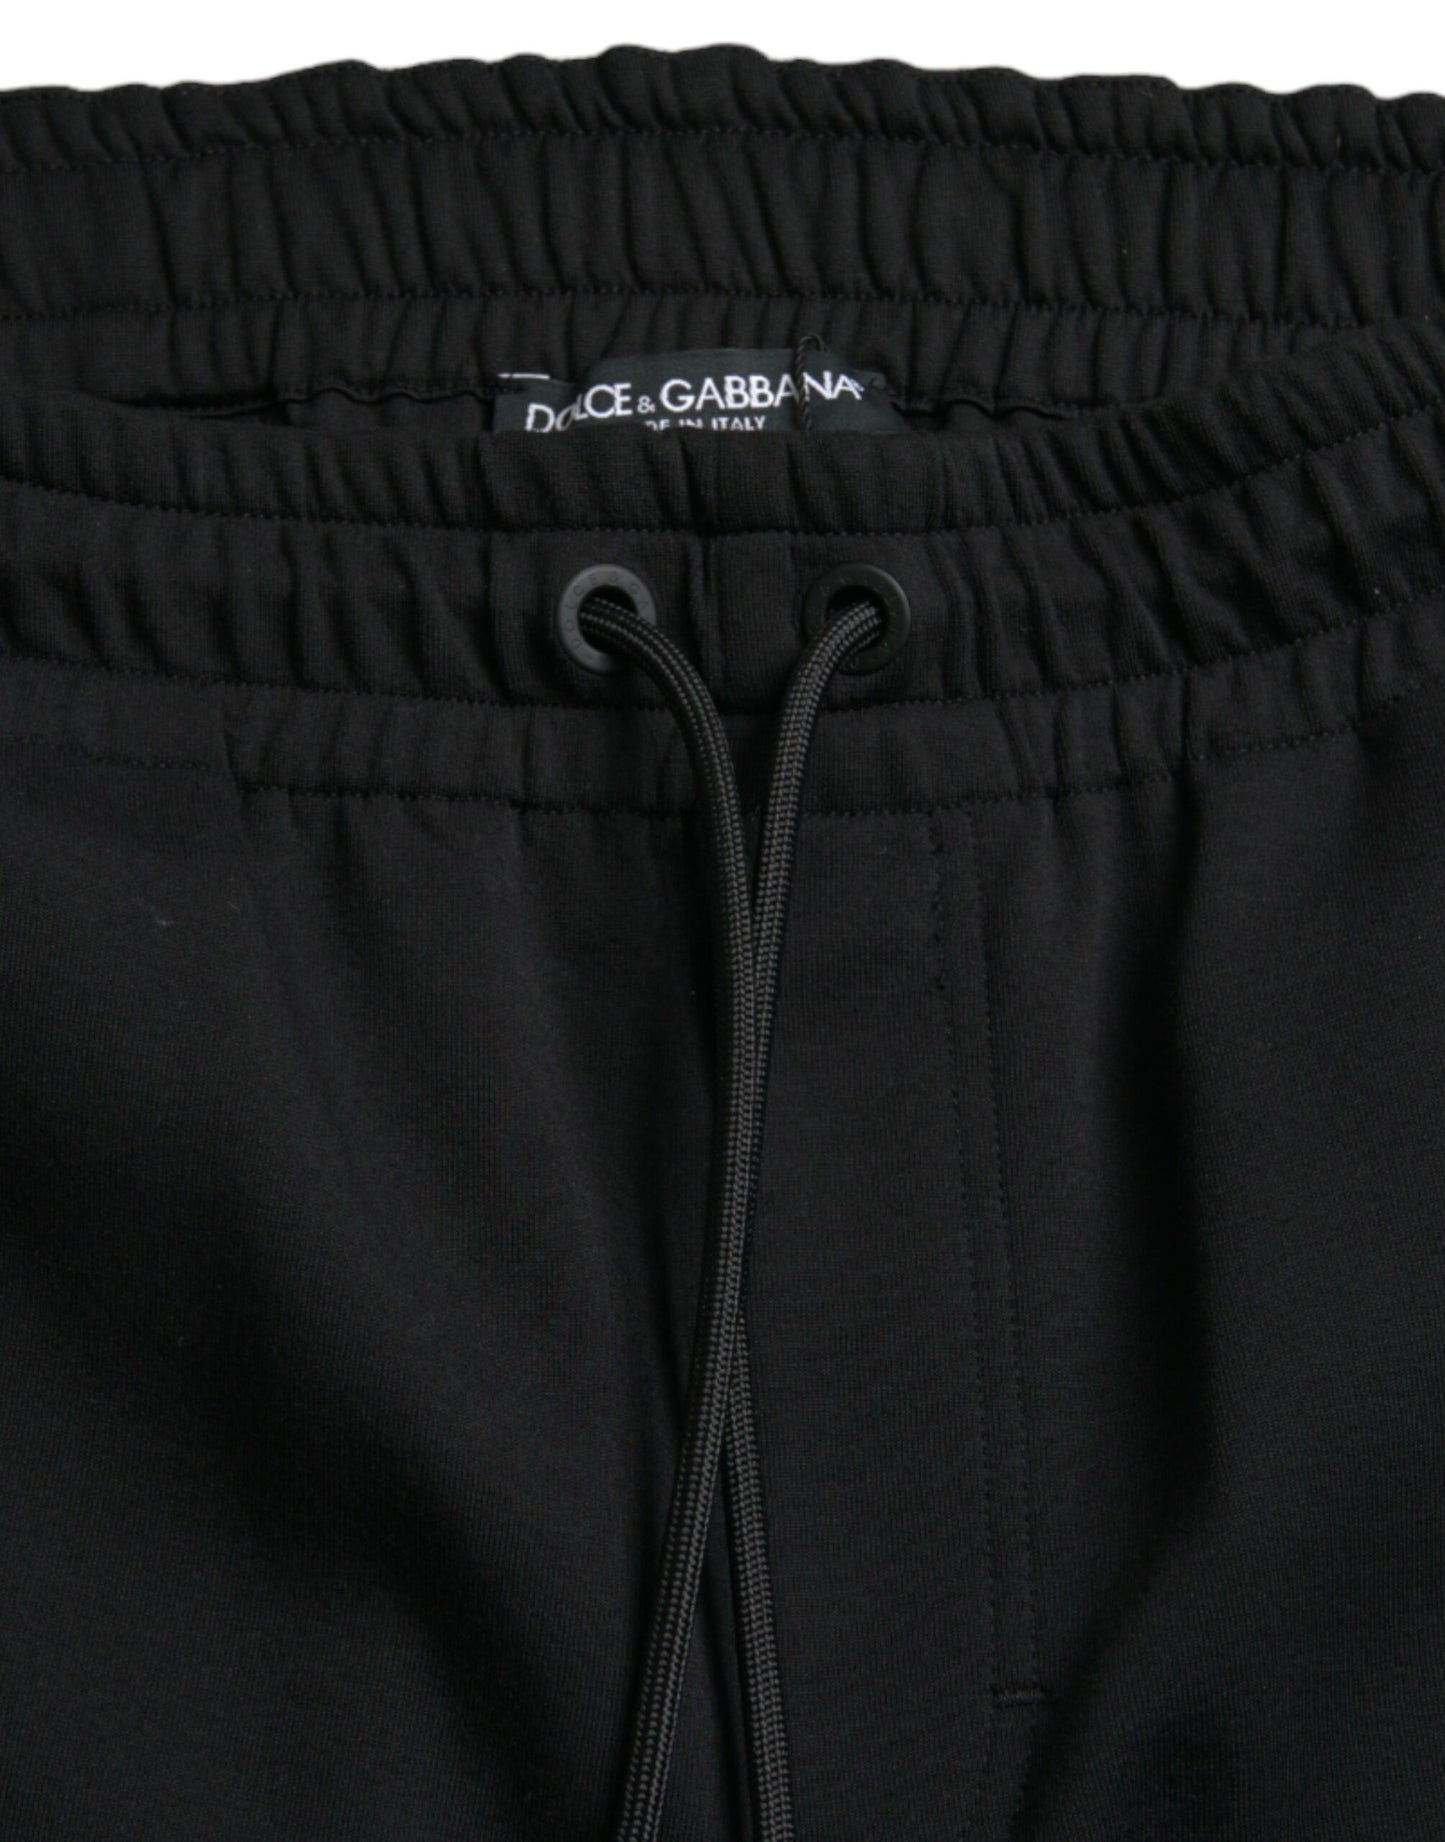 Dolce & Gabbana Black Cotton Blend Men Sweatpants Jogger Pants